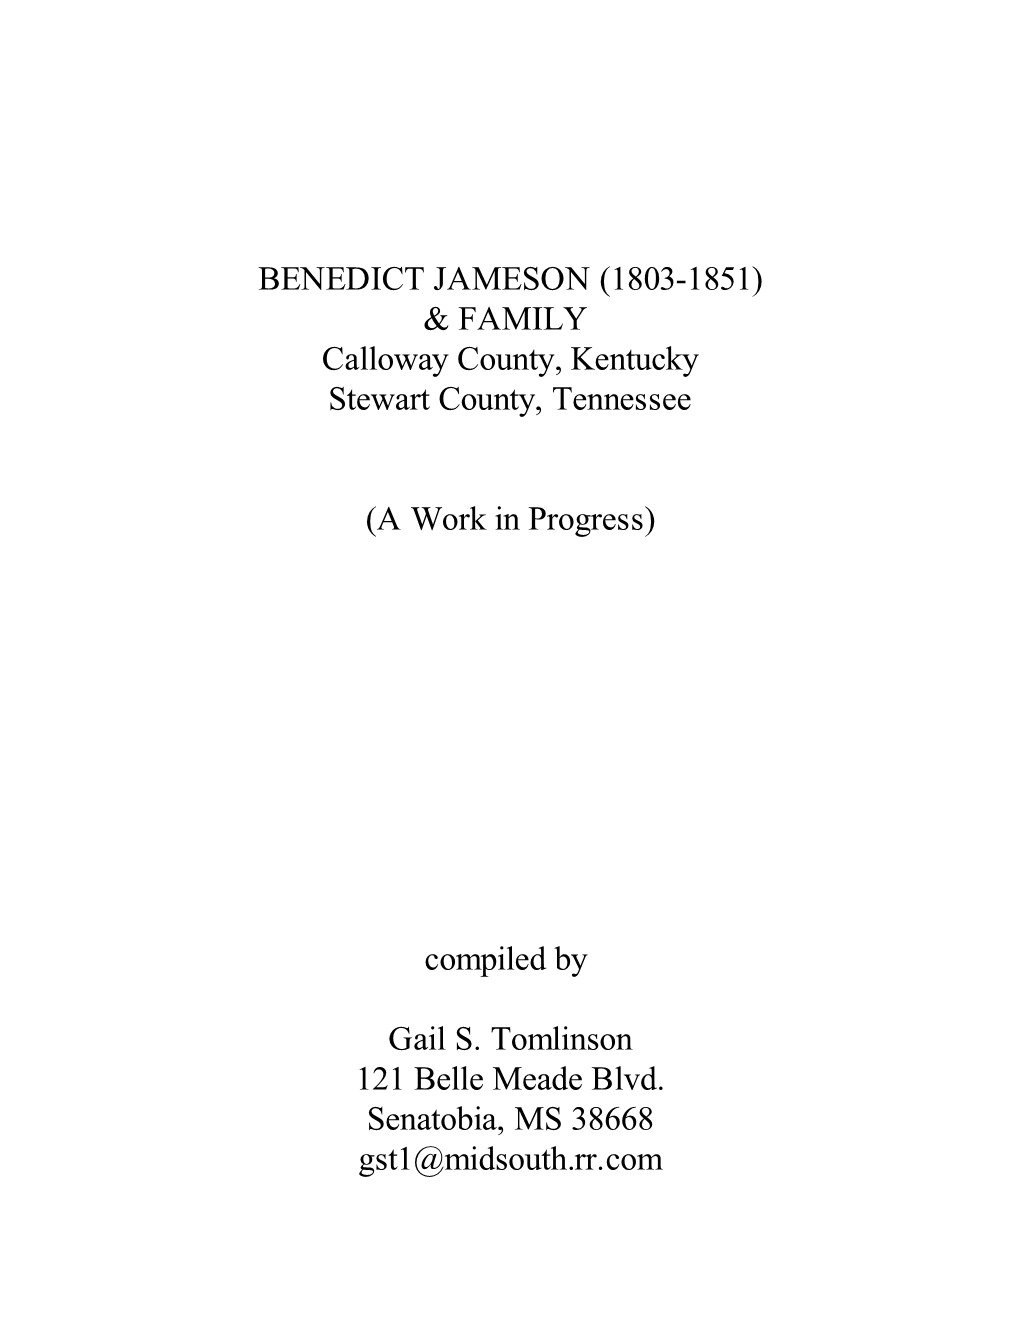 Family History of Benedict Jameson